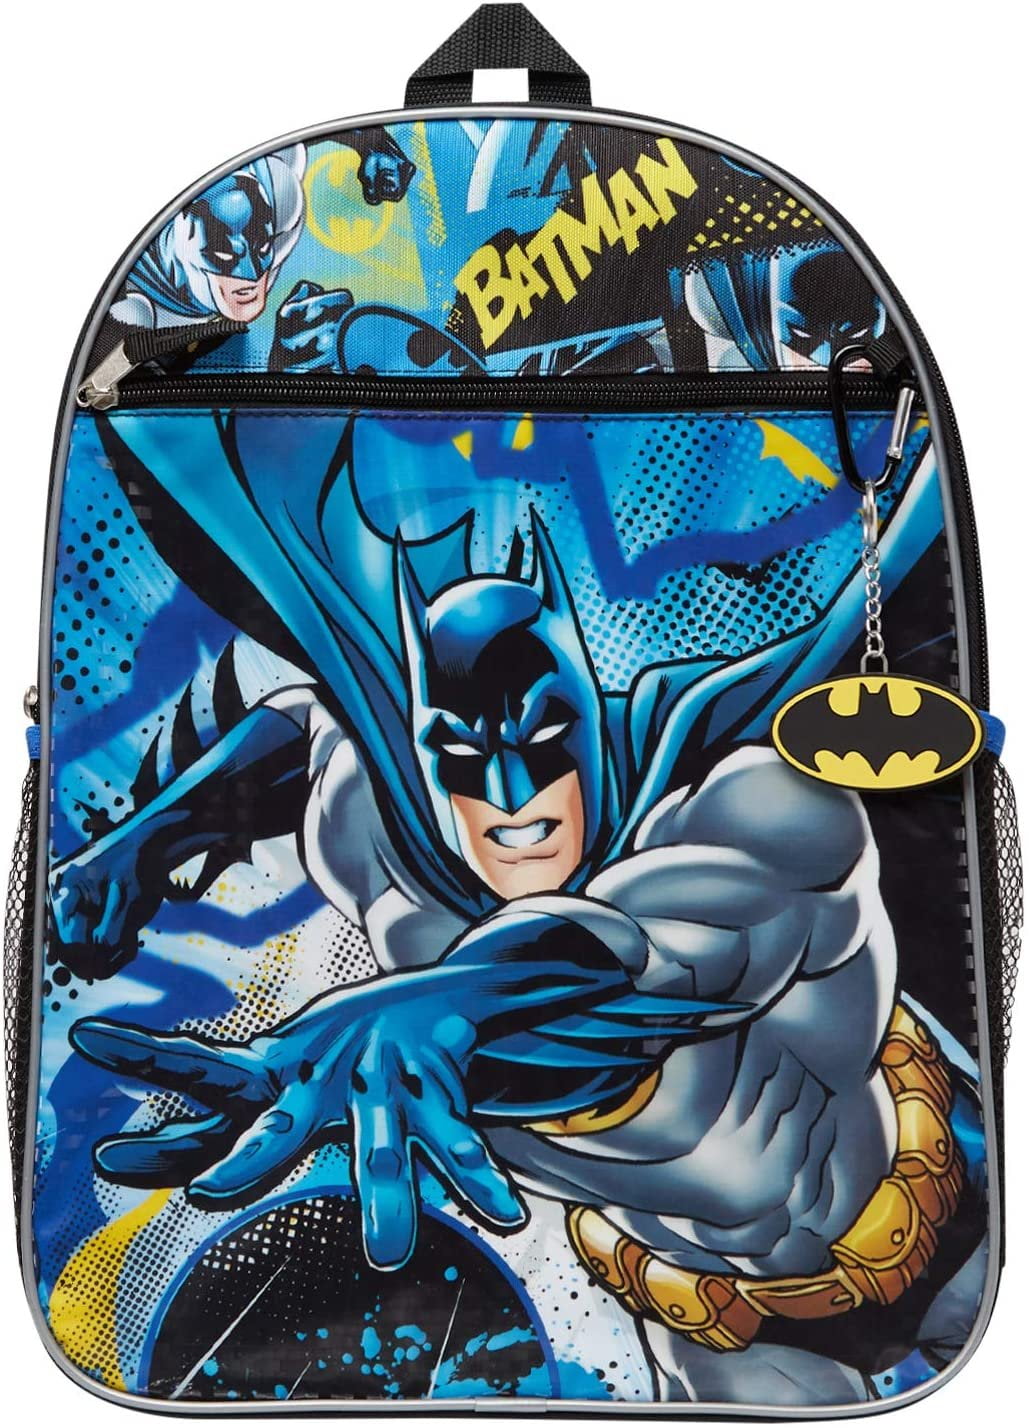 Dolls Kill x DC Comics Rhinestone Studded Batman Handbag - Black